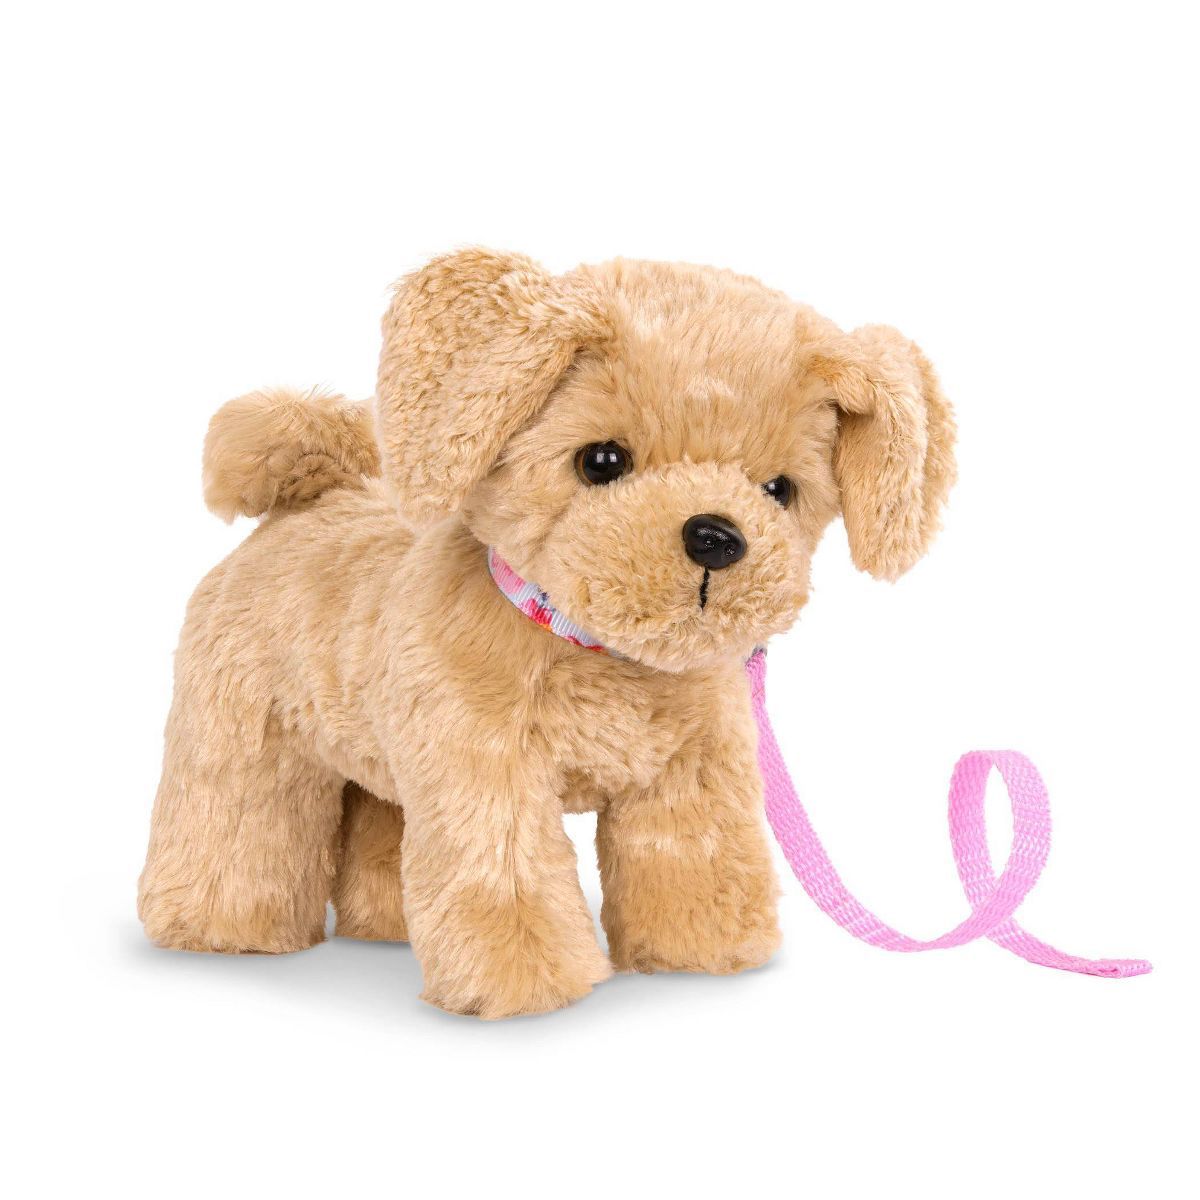 Our Generation Pet Dog Plush with Posable Legs - Golden Poodle Pup | Target